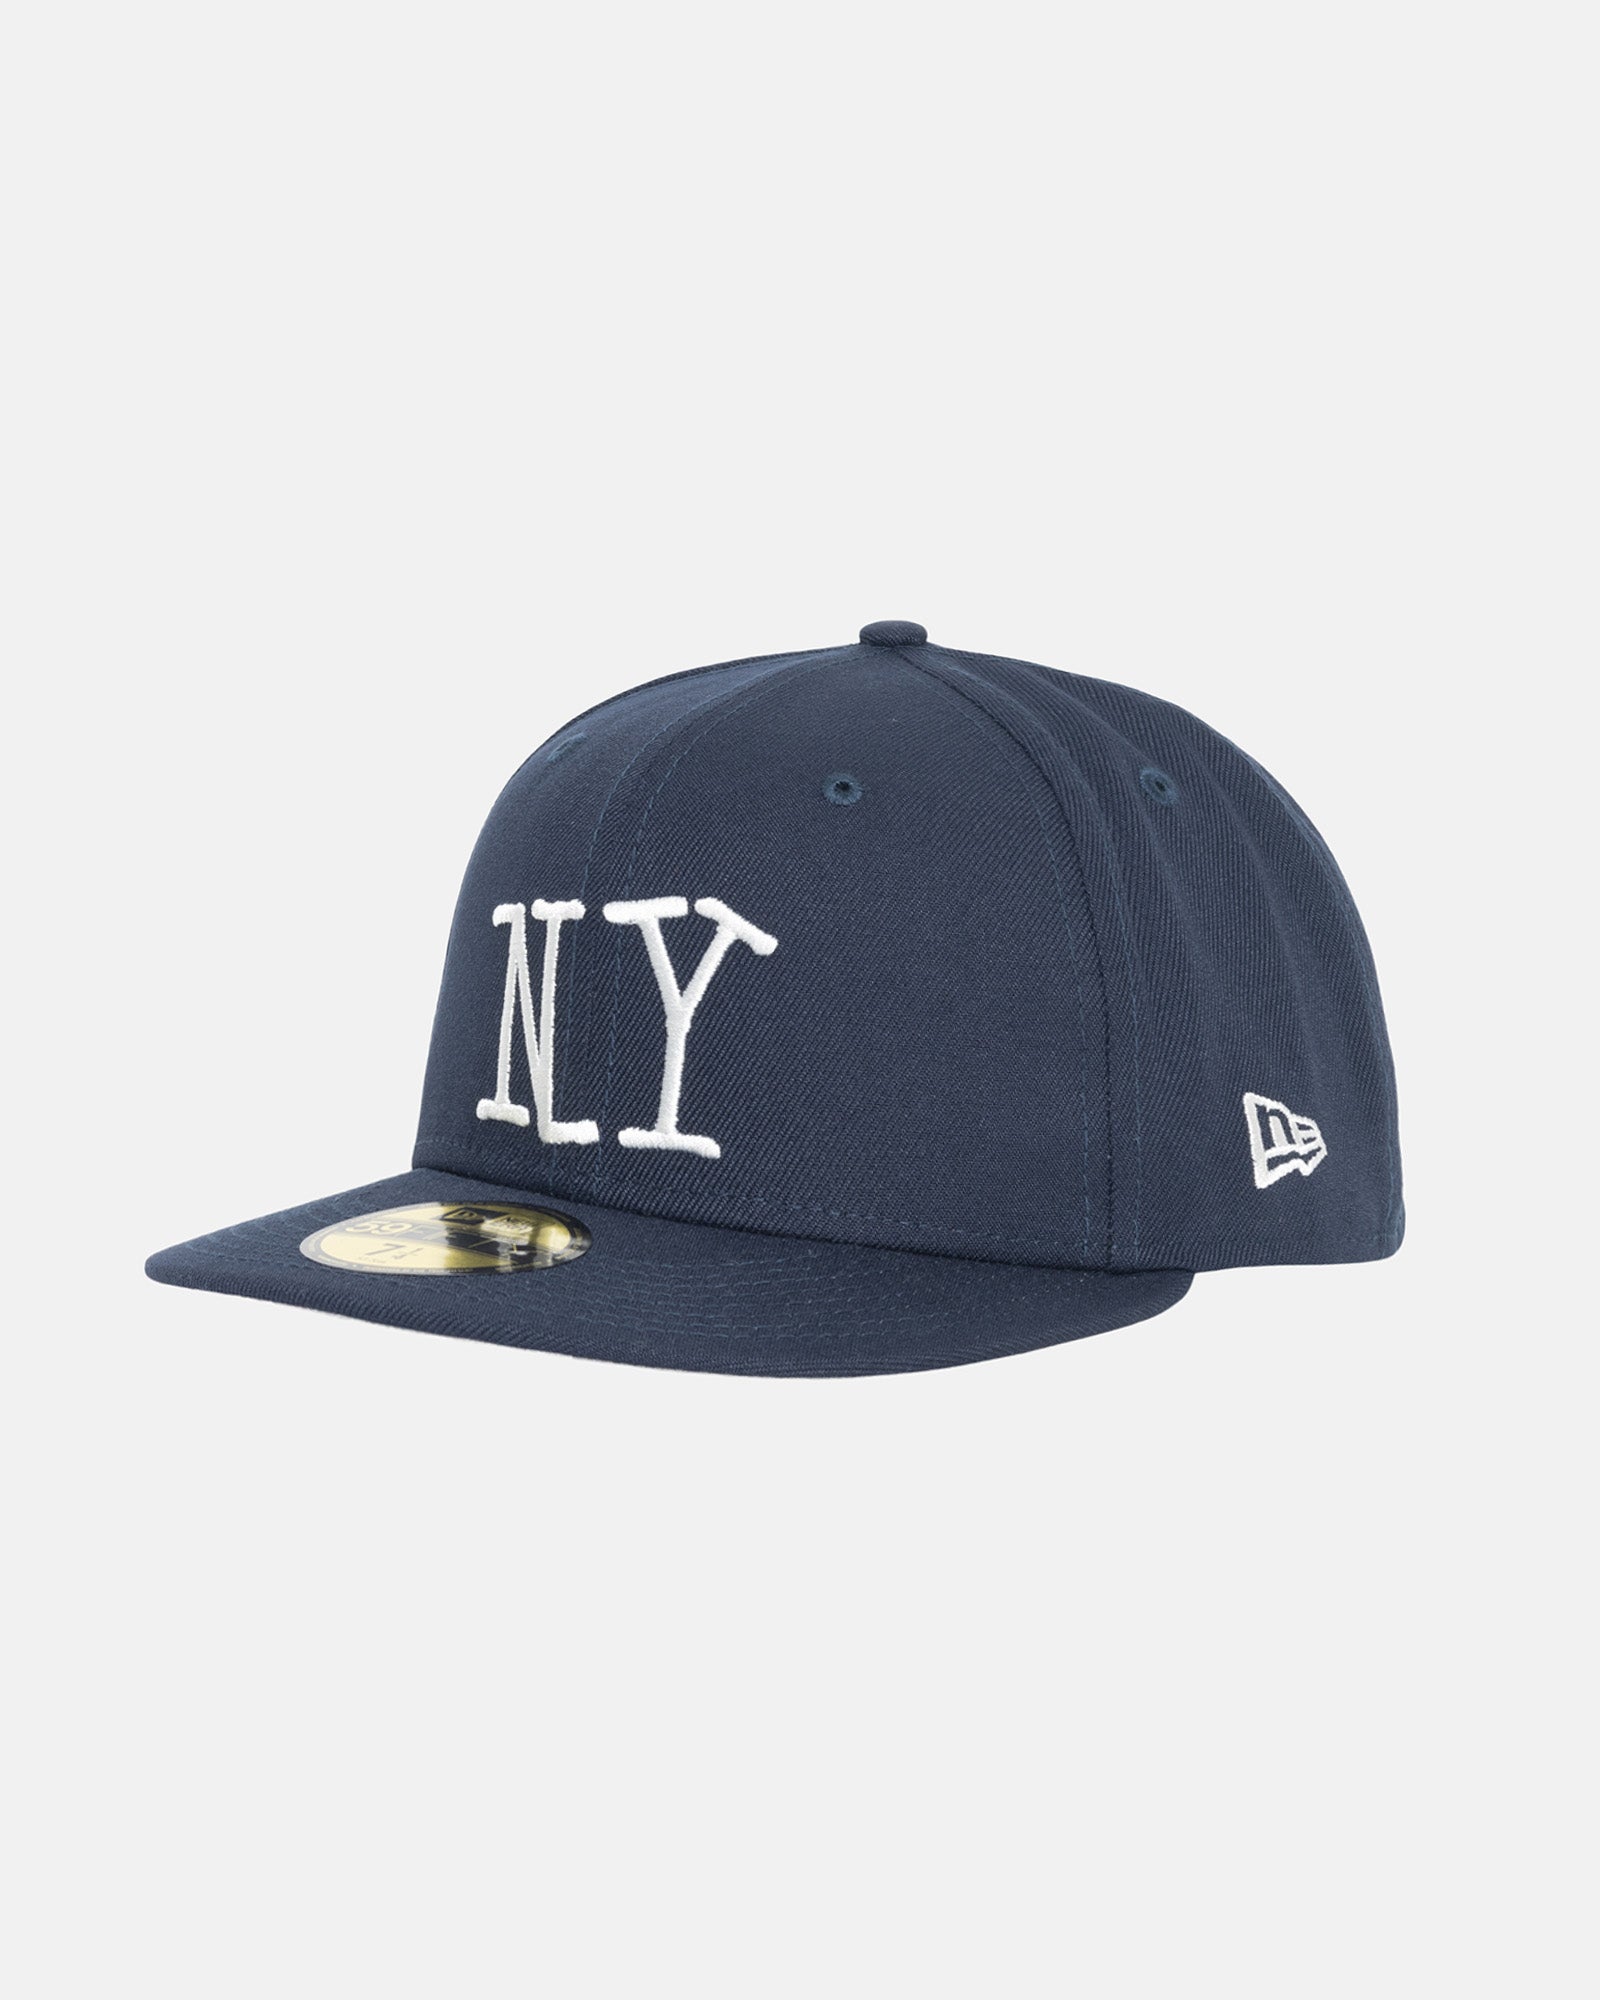 old stussy NYC cap-